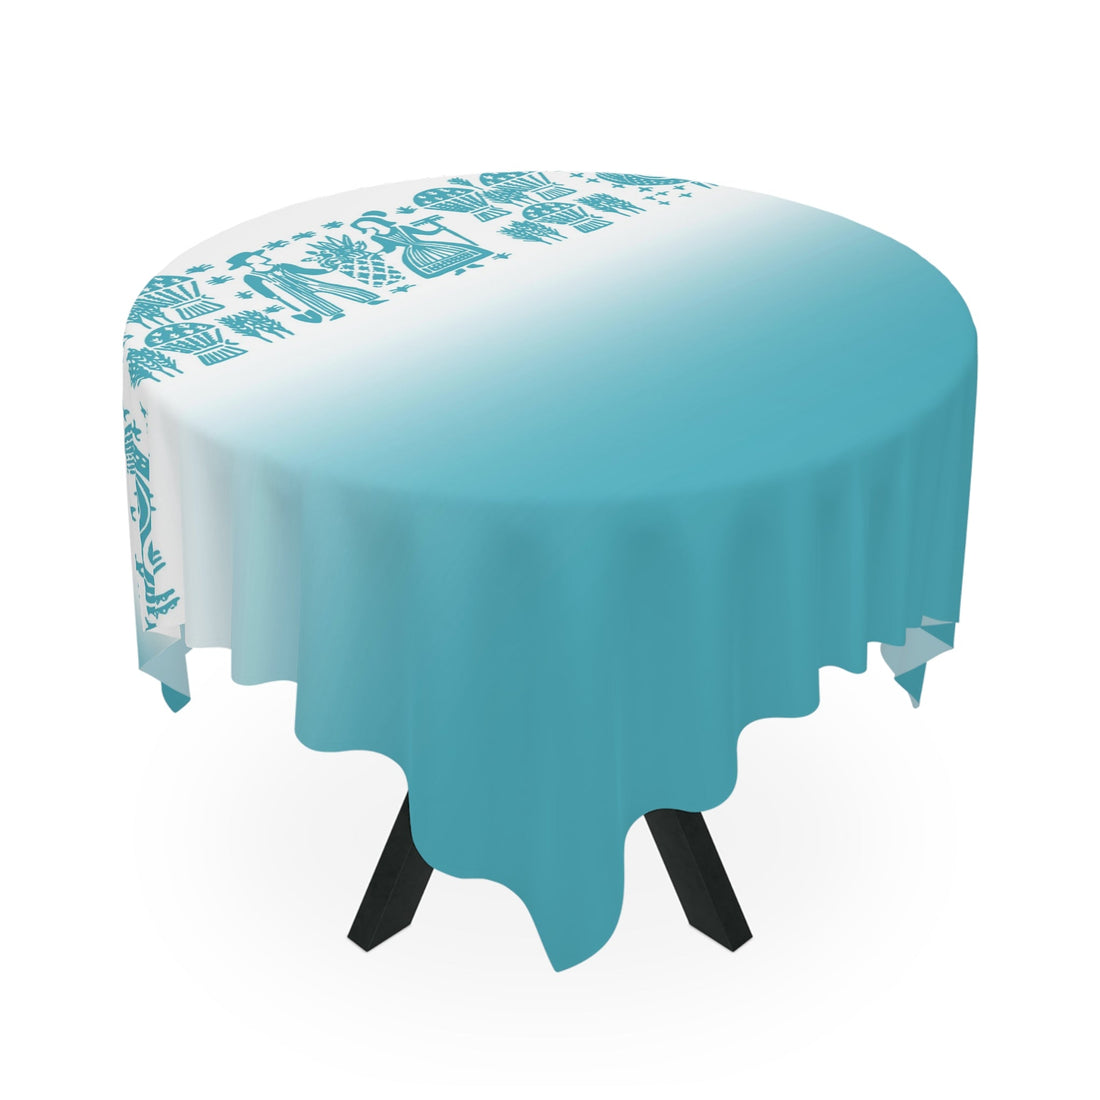 Pyrex Butterprint, Aqua, White, 50s Kitschy Mod Tablecloth Home Decor One size / White